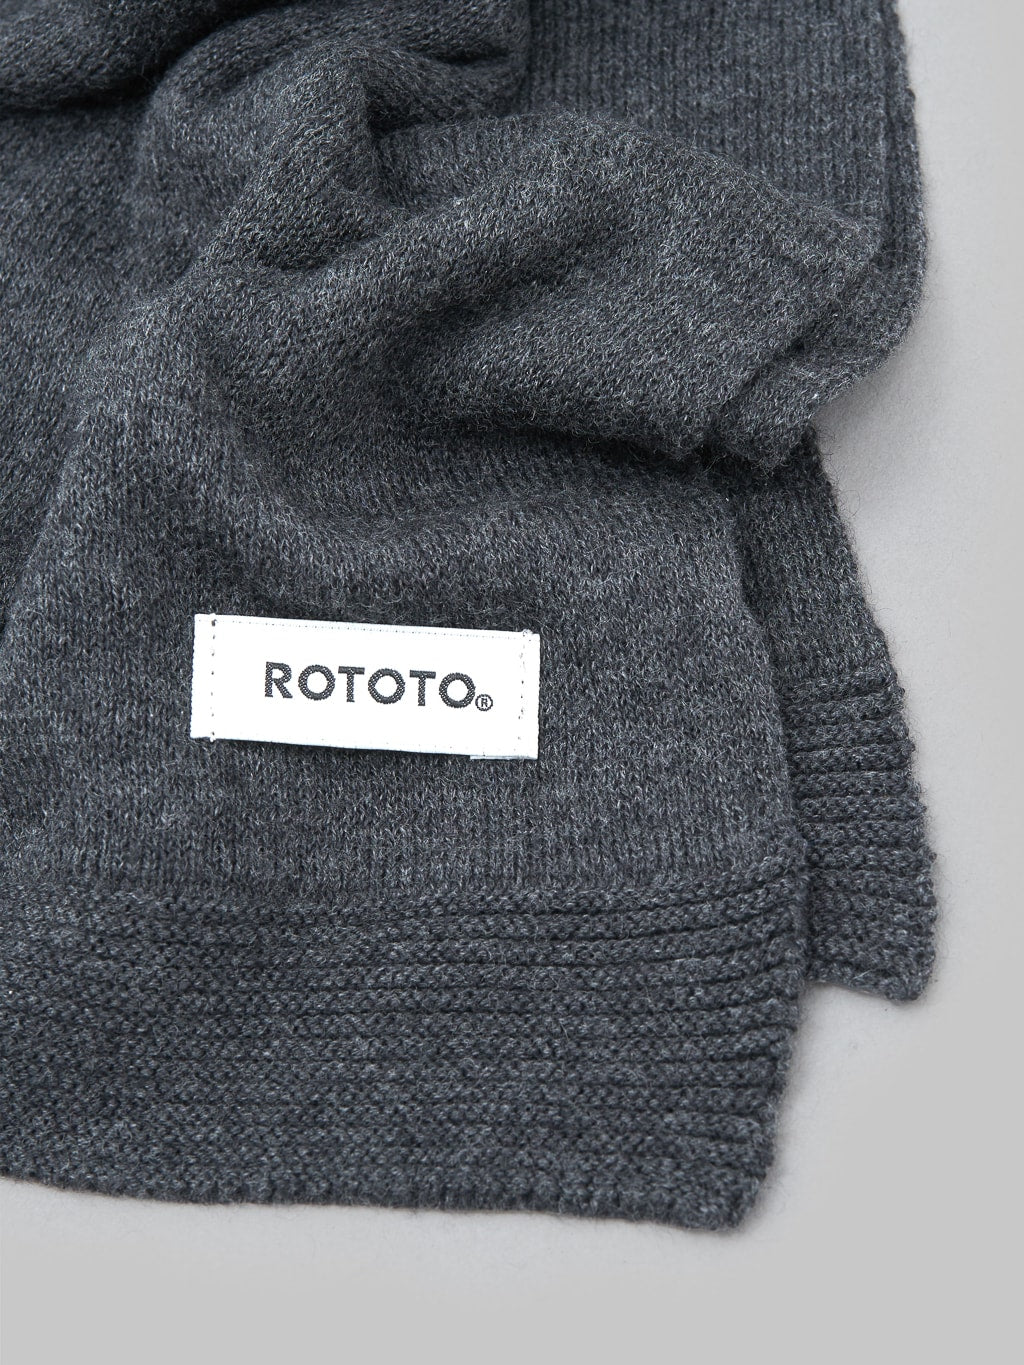 Rototo Cotton Cashmere Muffler Charcoal ultra soft